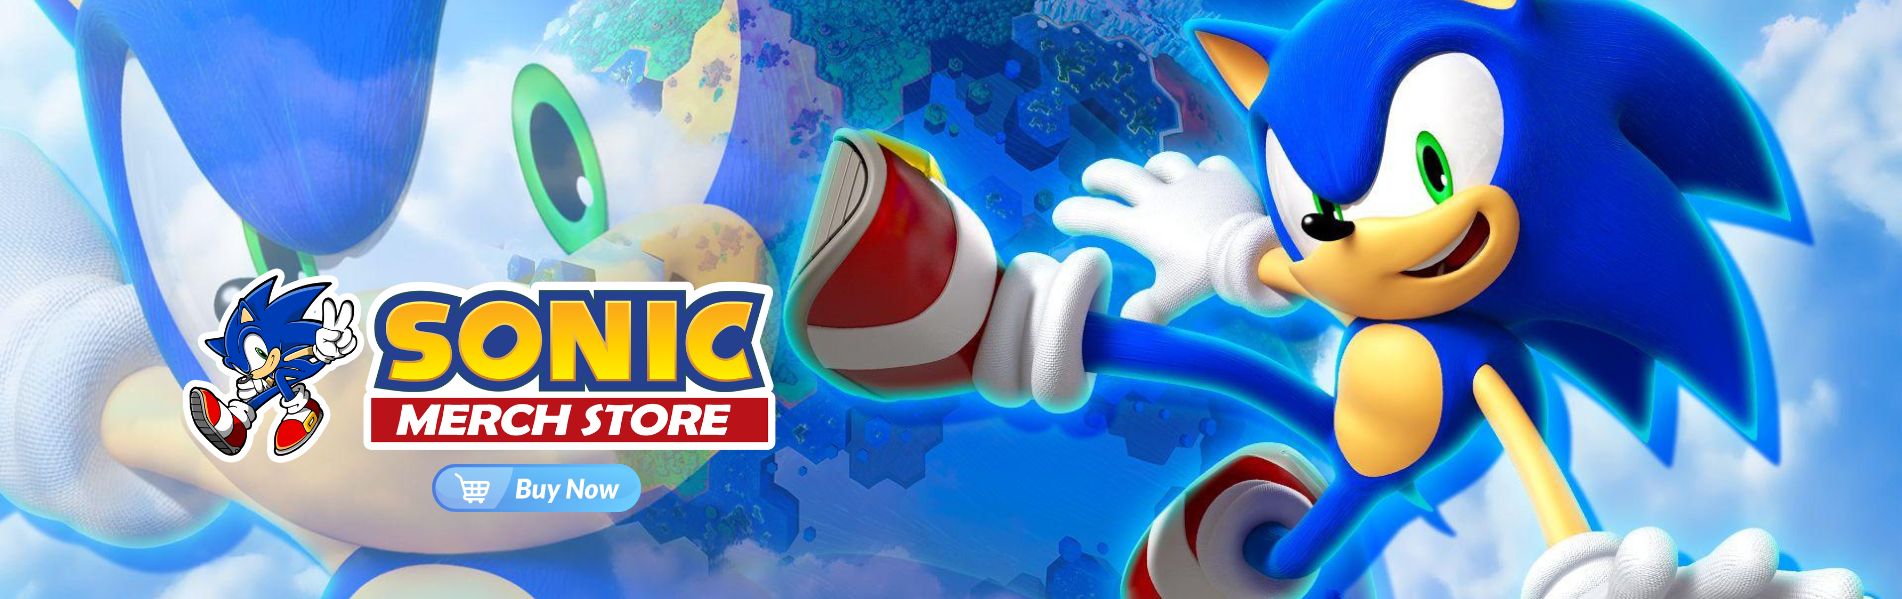 Sonic Merch Store Banner